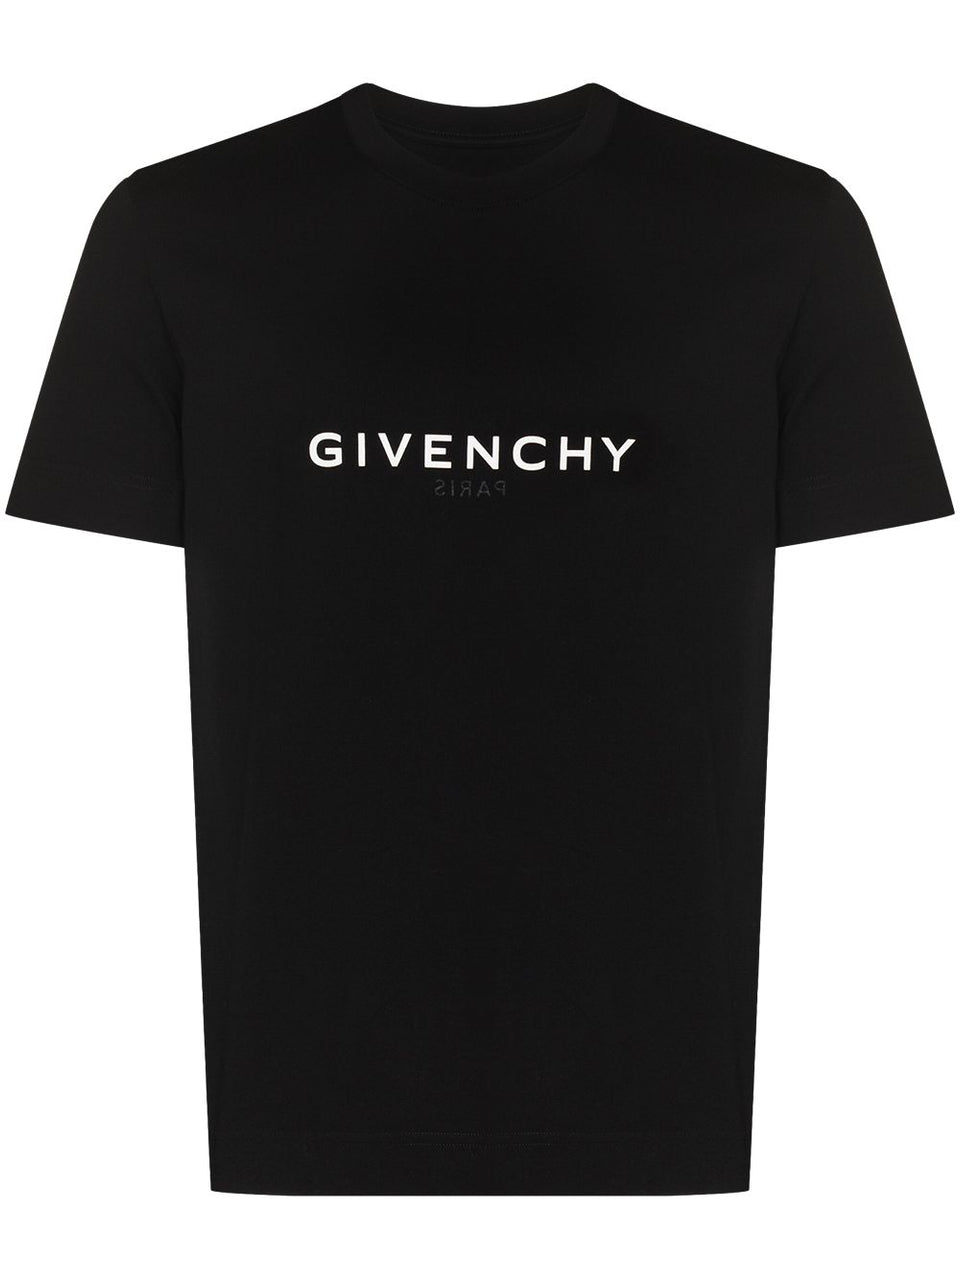 GIVENCHY  メンズ Tシャツ